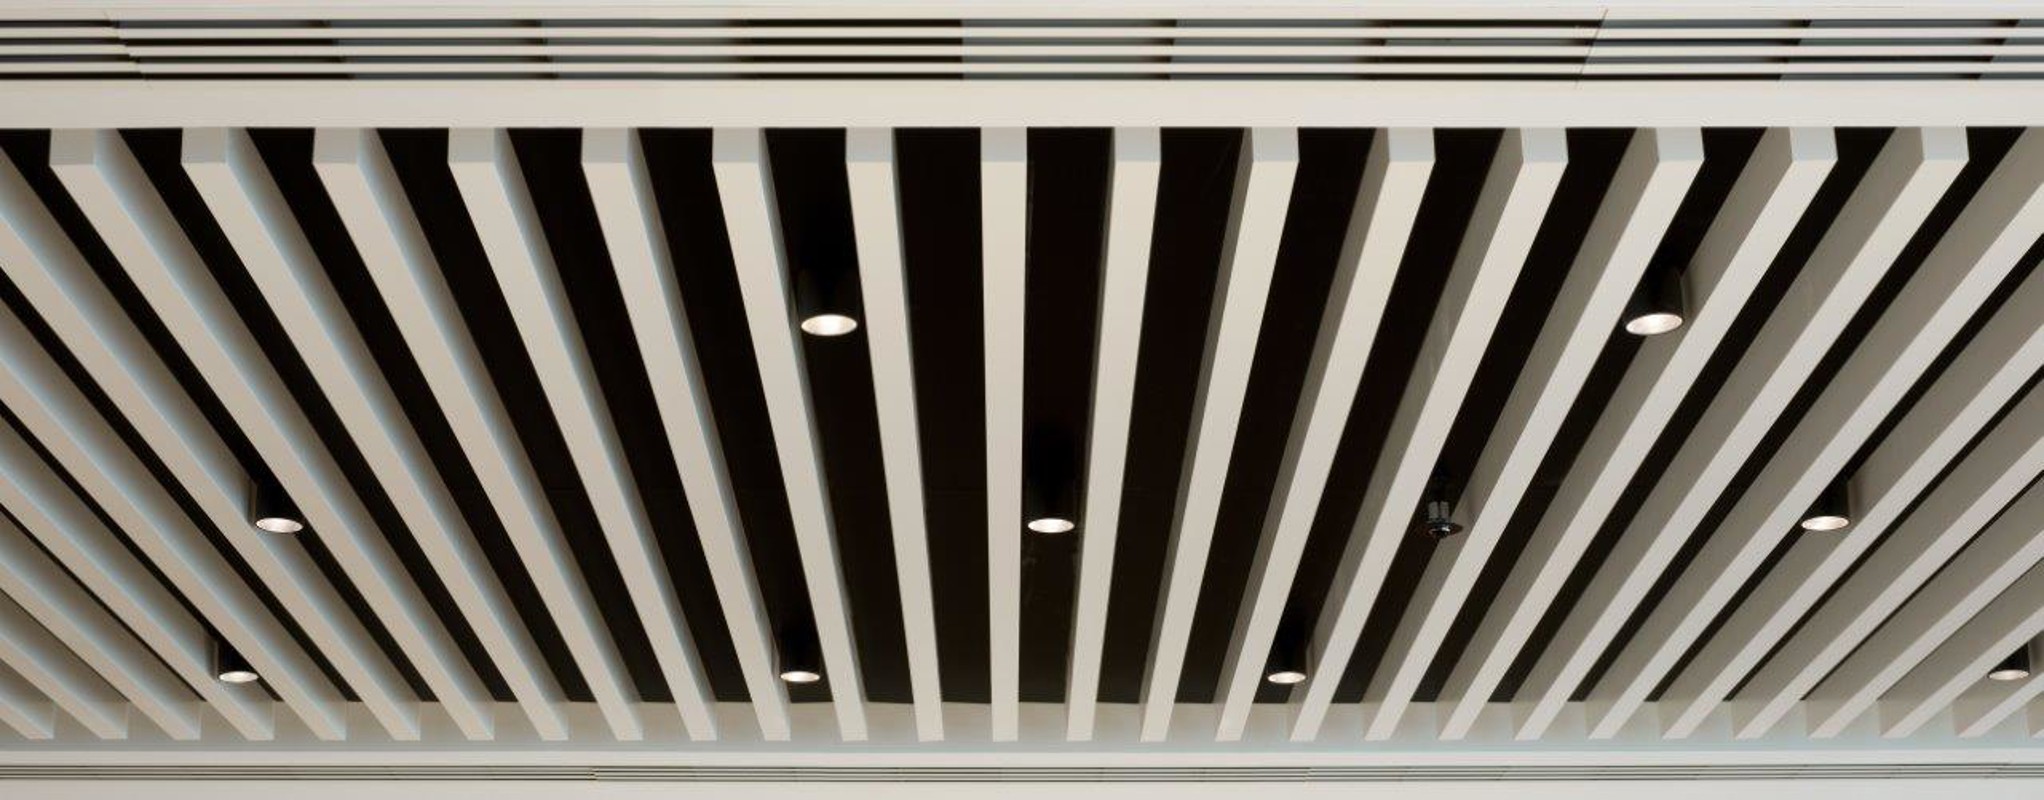 SAS740 metal ceiling